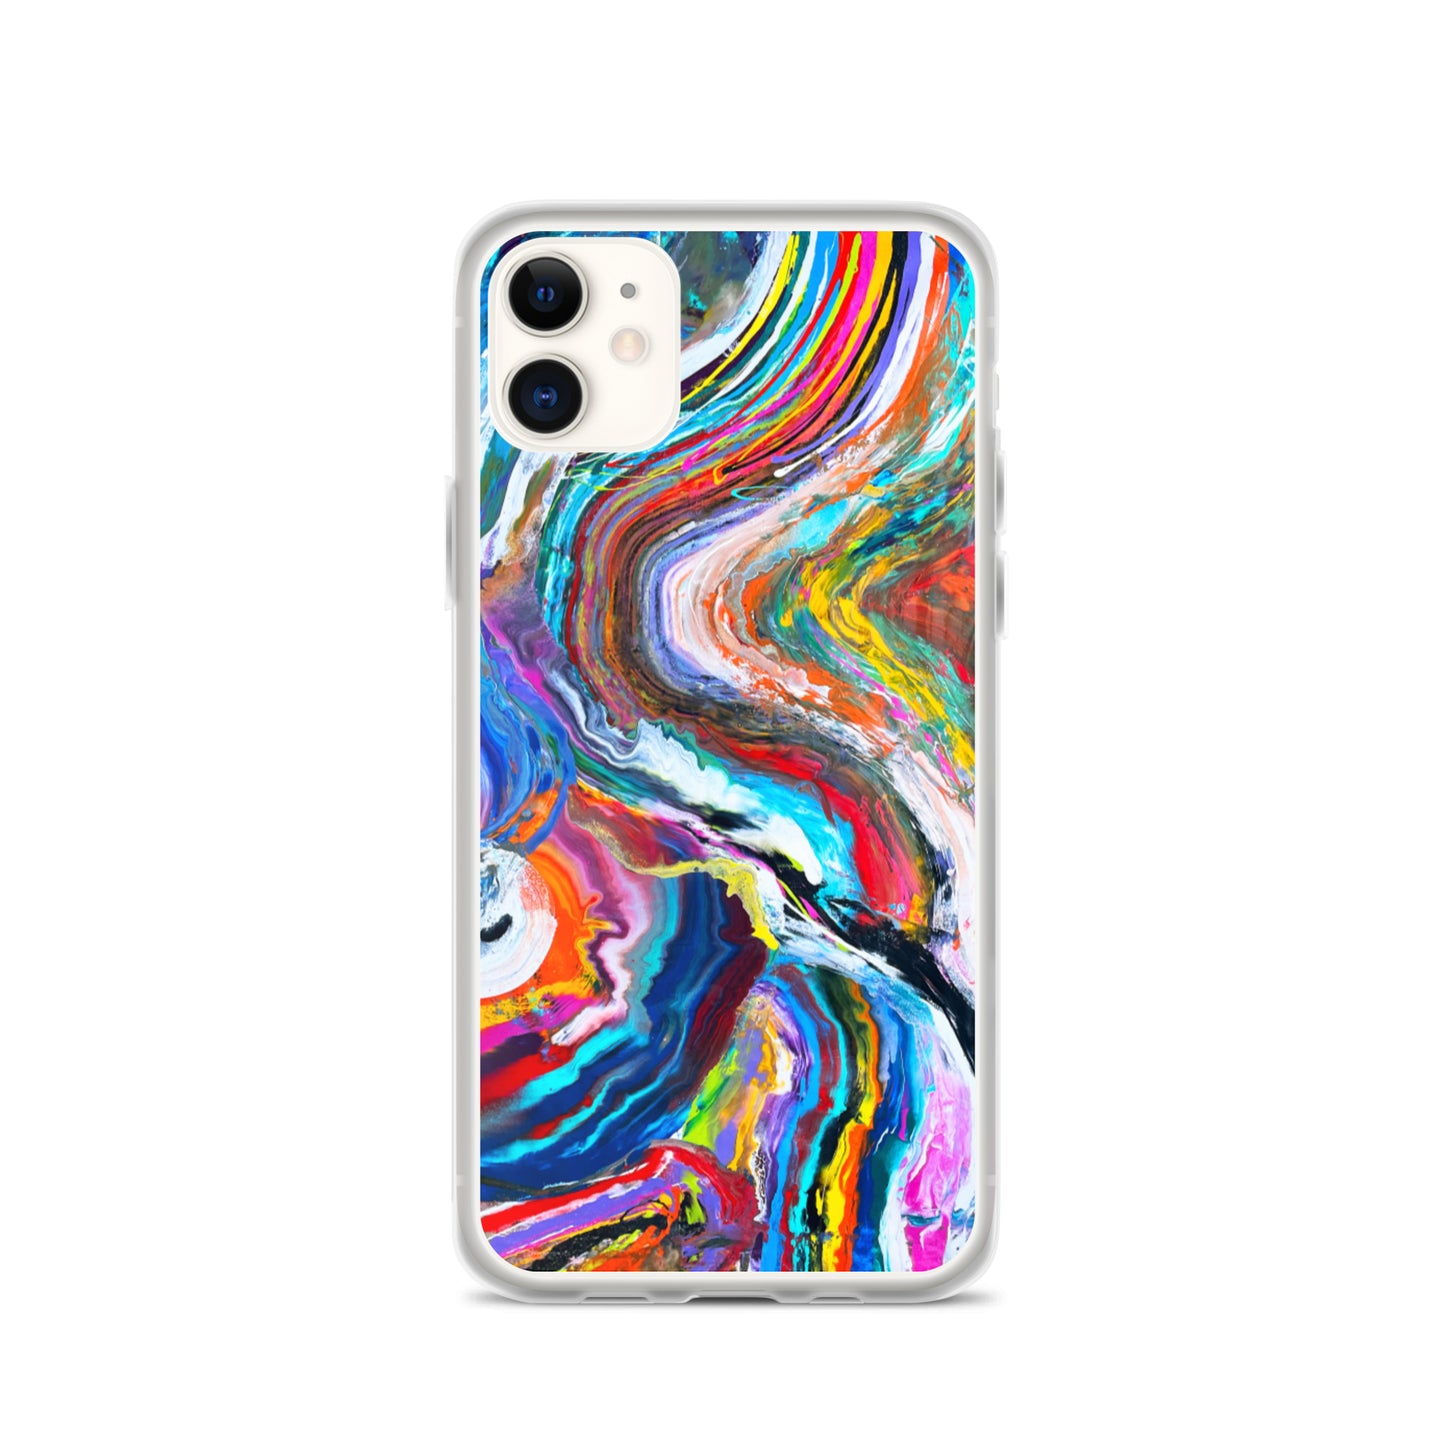 iPhone Case - Rainbow Wave design